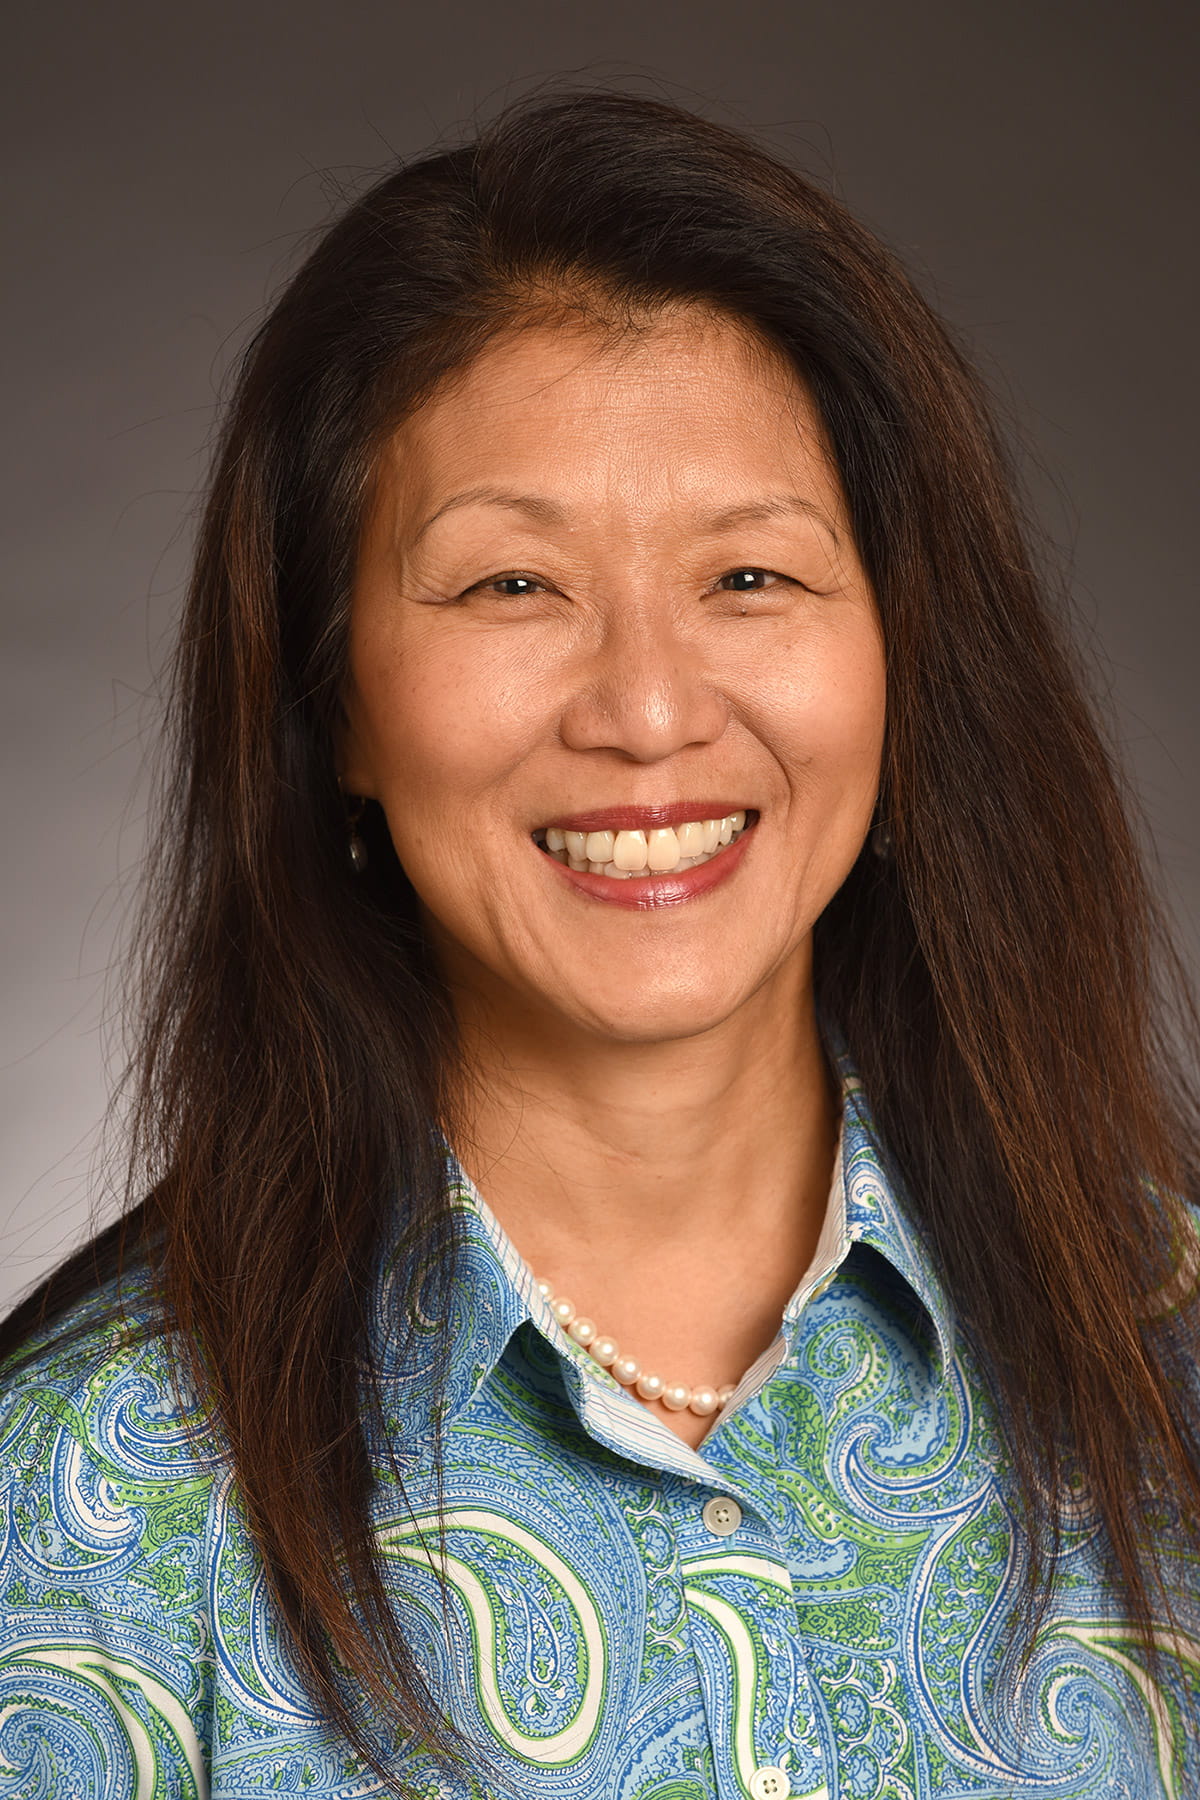 A photo of Lisa W. Kuan.